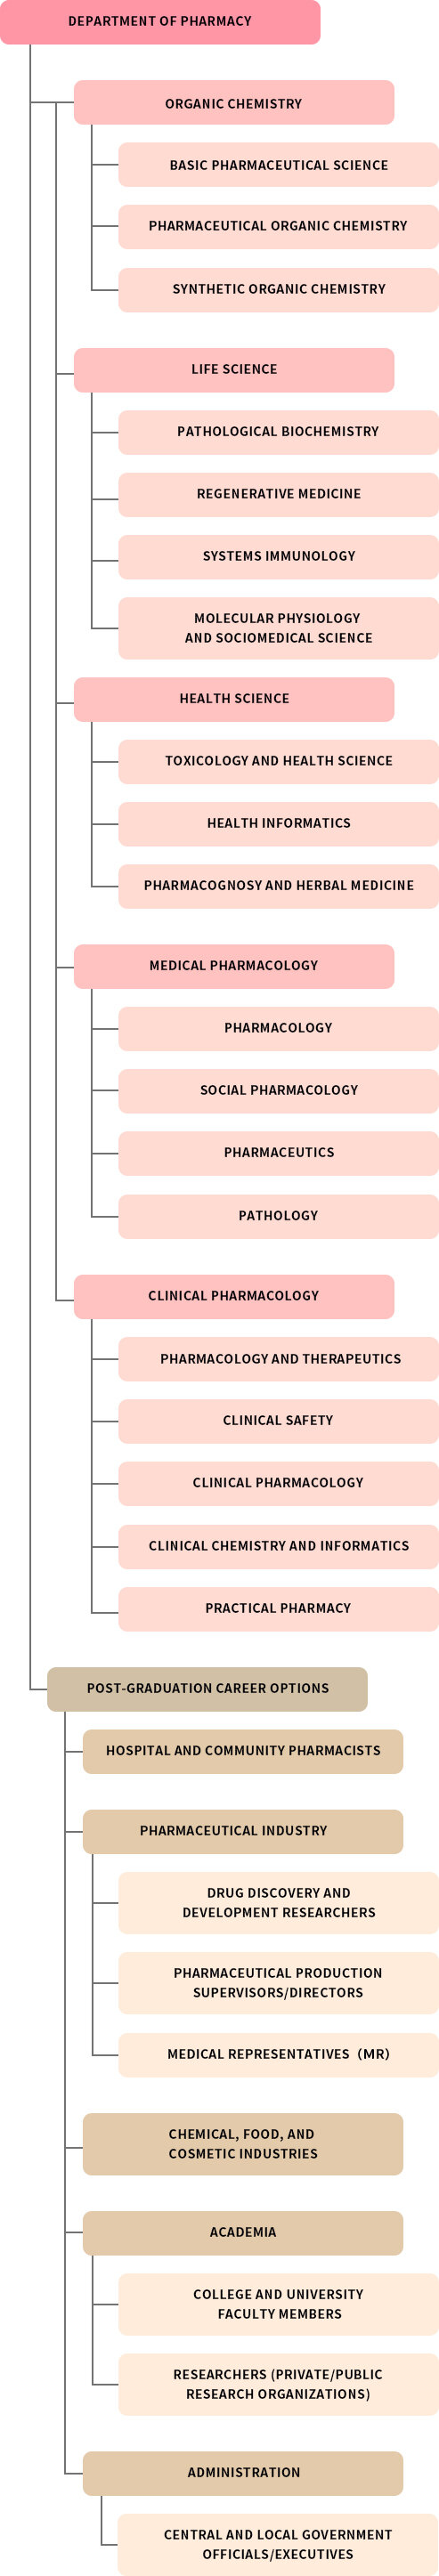 pharmacy-chart